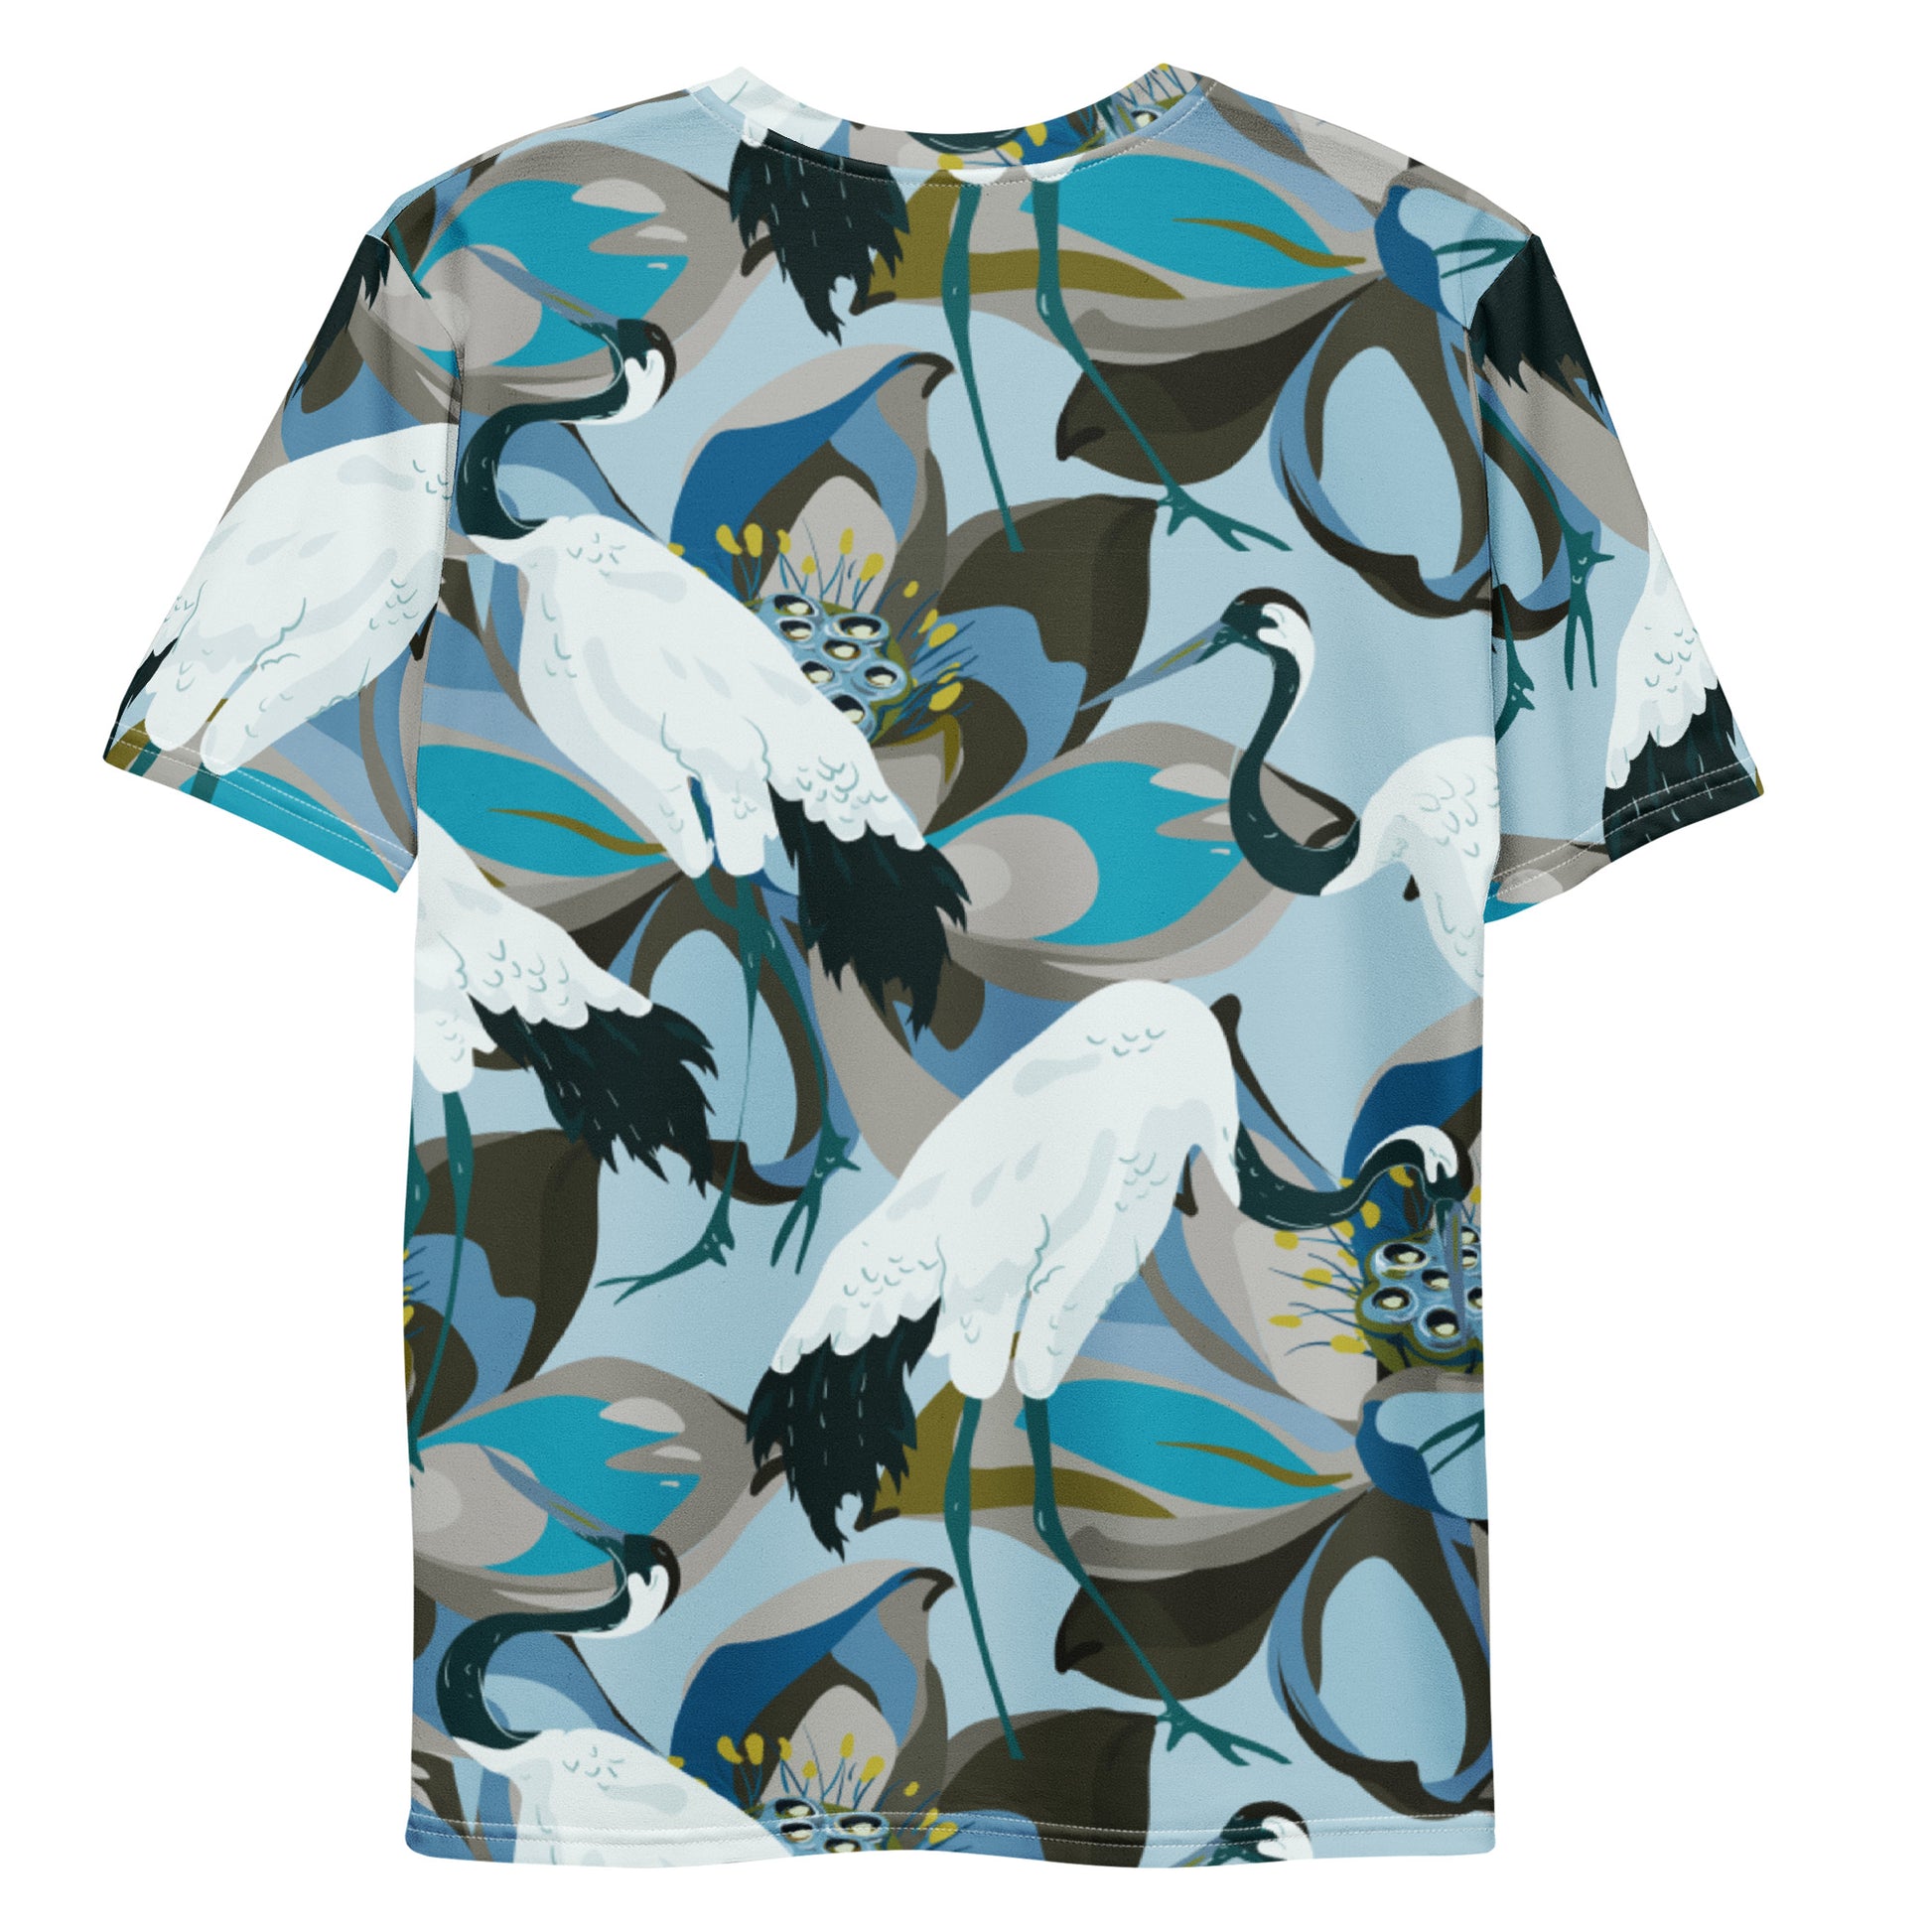 Kurki (Crane) - Men's t-shirt - T-shirt- Print N Stuff - [designed in Turku FInland]